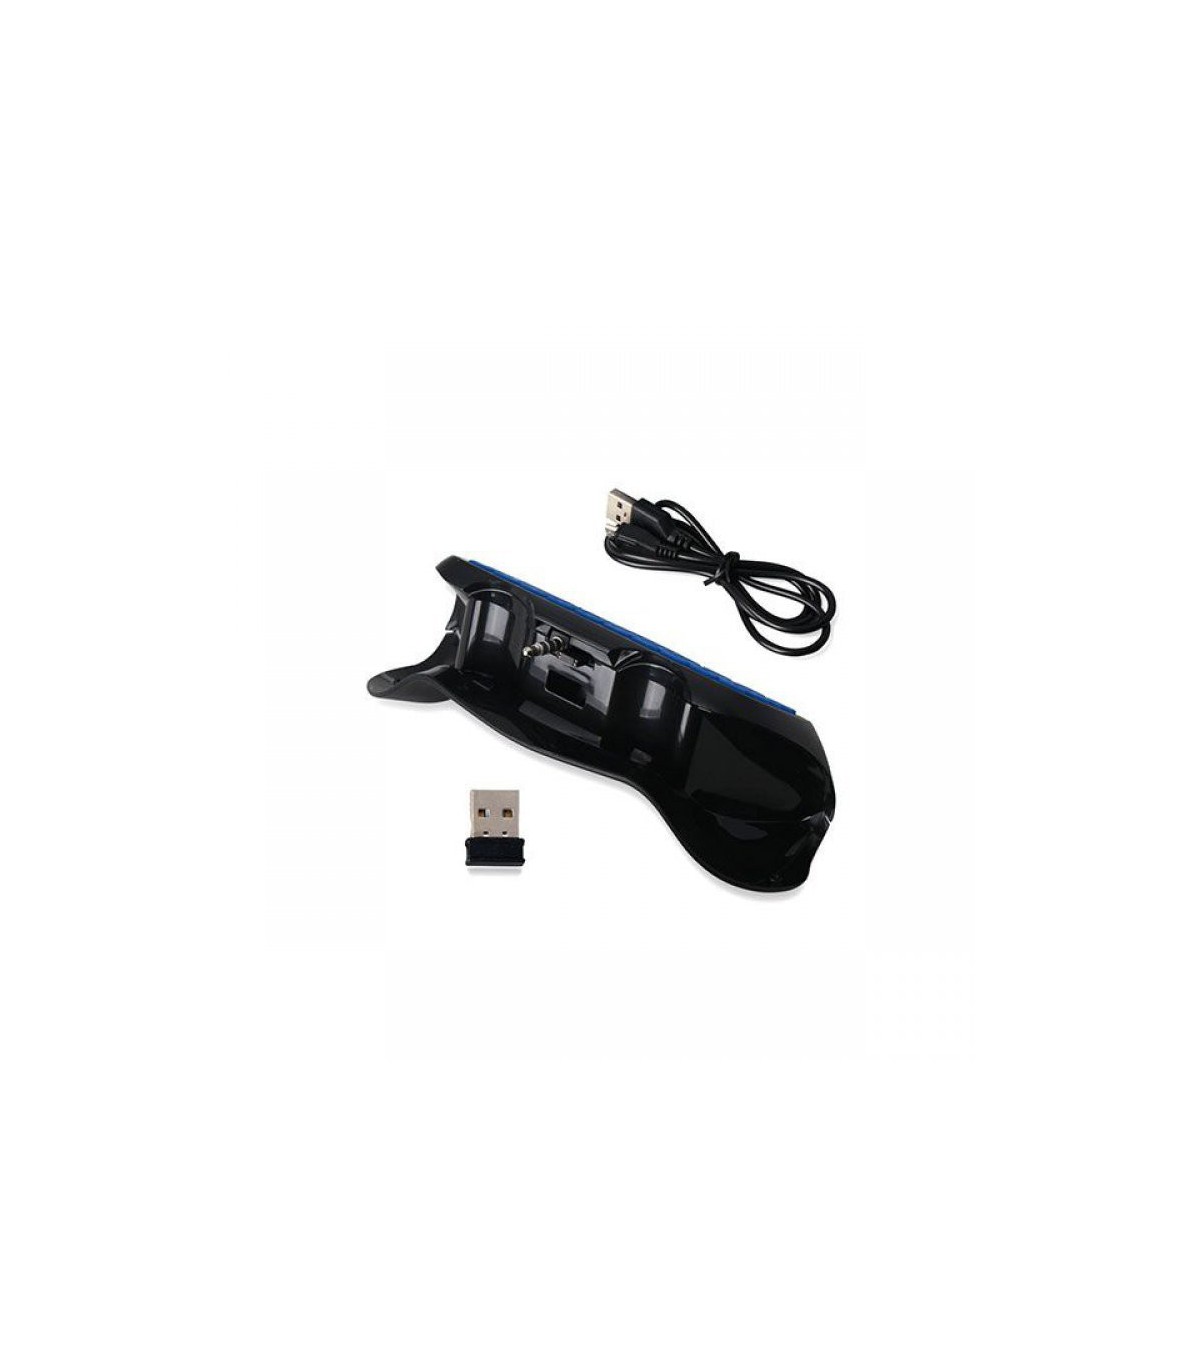 کیبورد وایرلس برای پلی استیشن ۴ Dobe Wireless Keyboard PS4